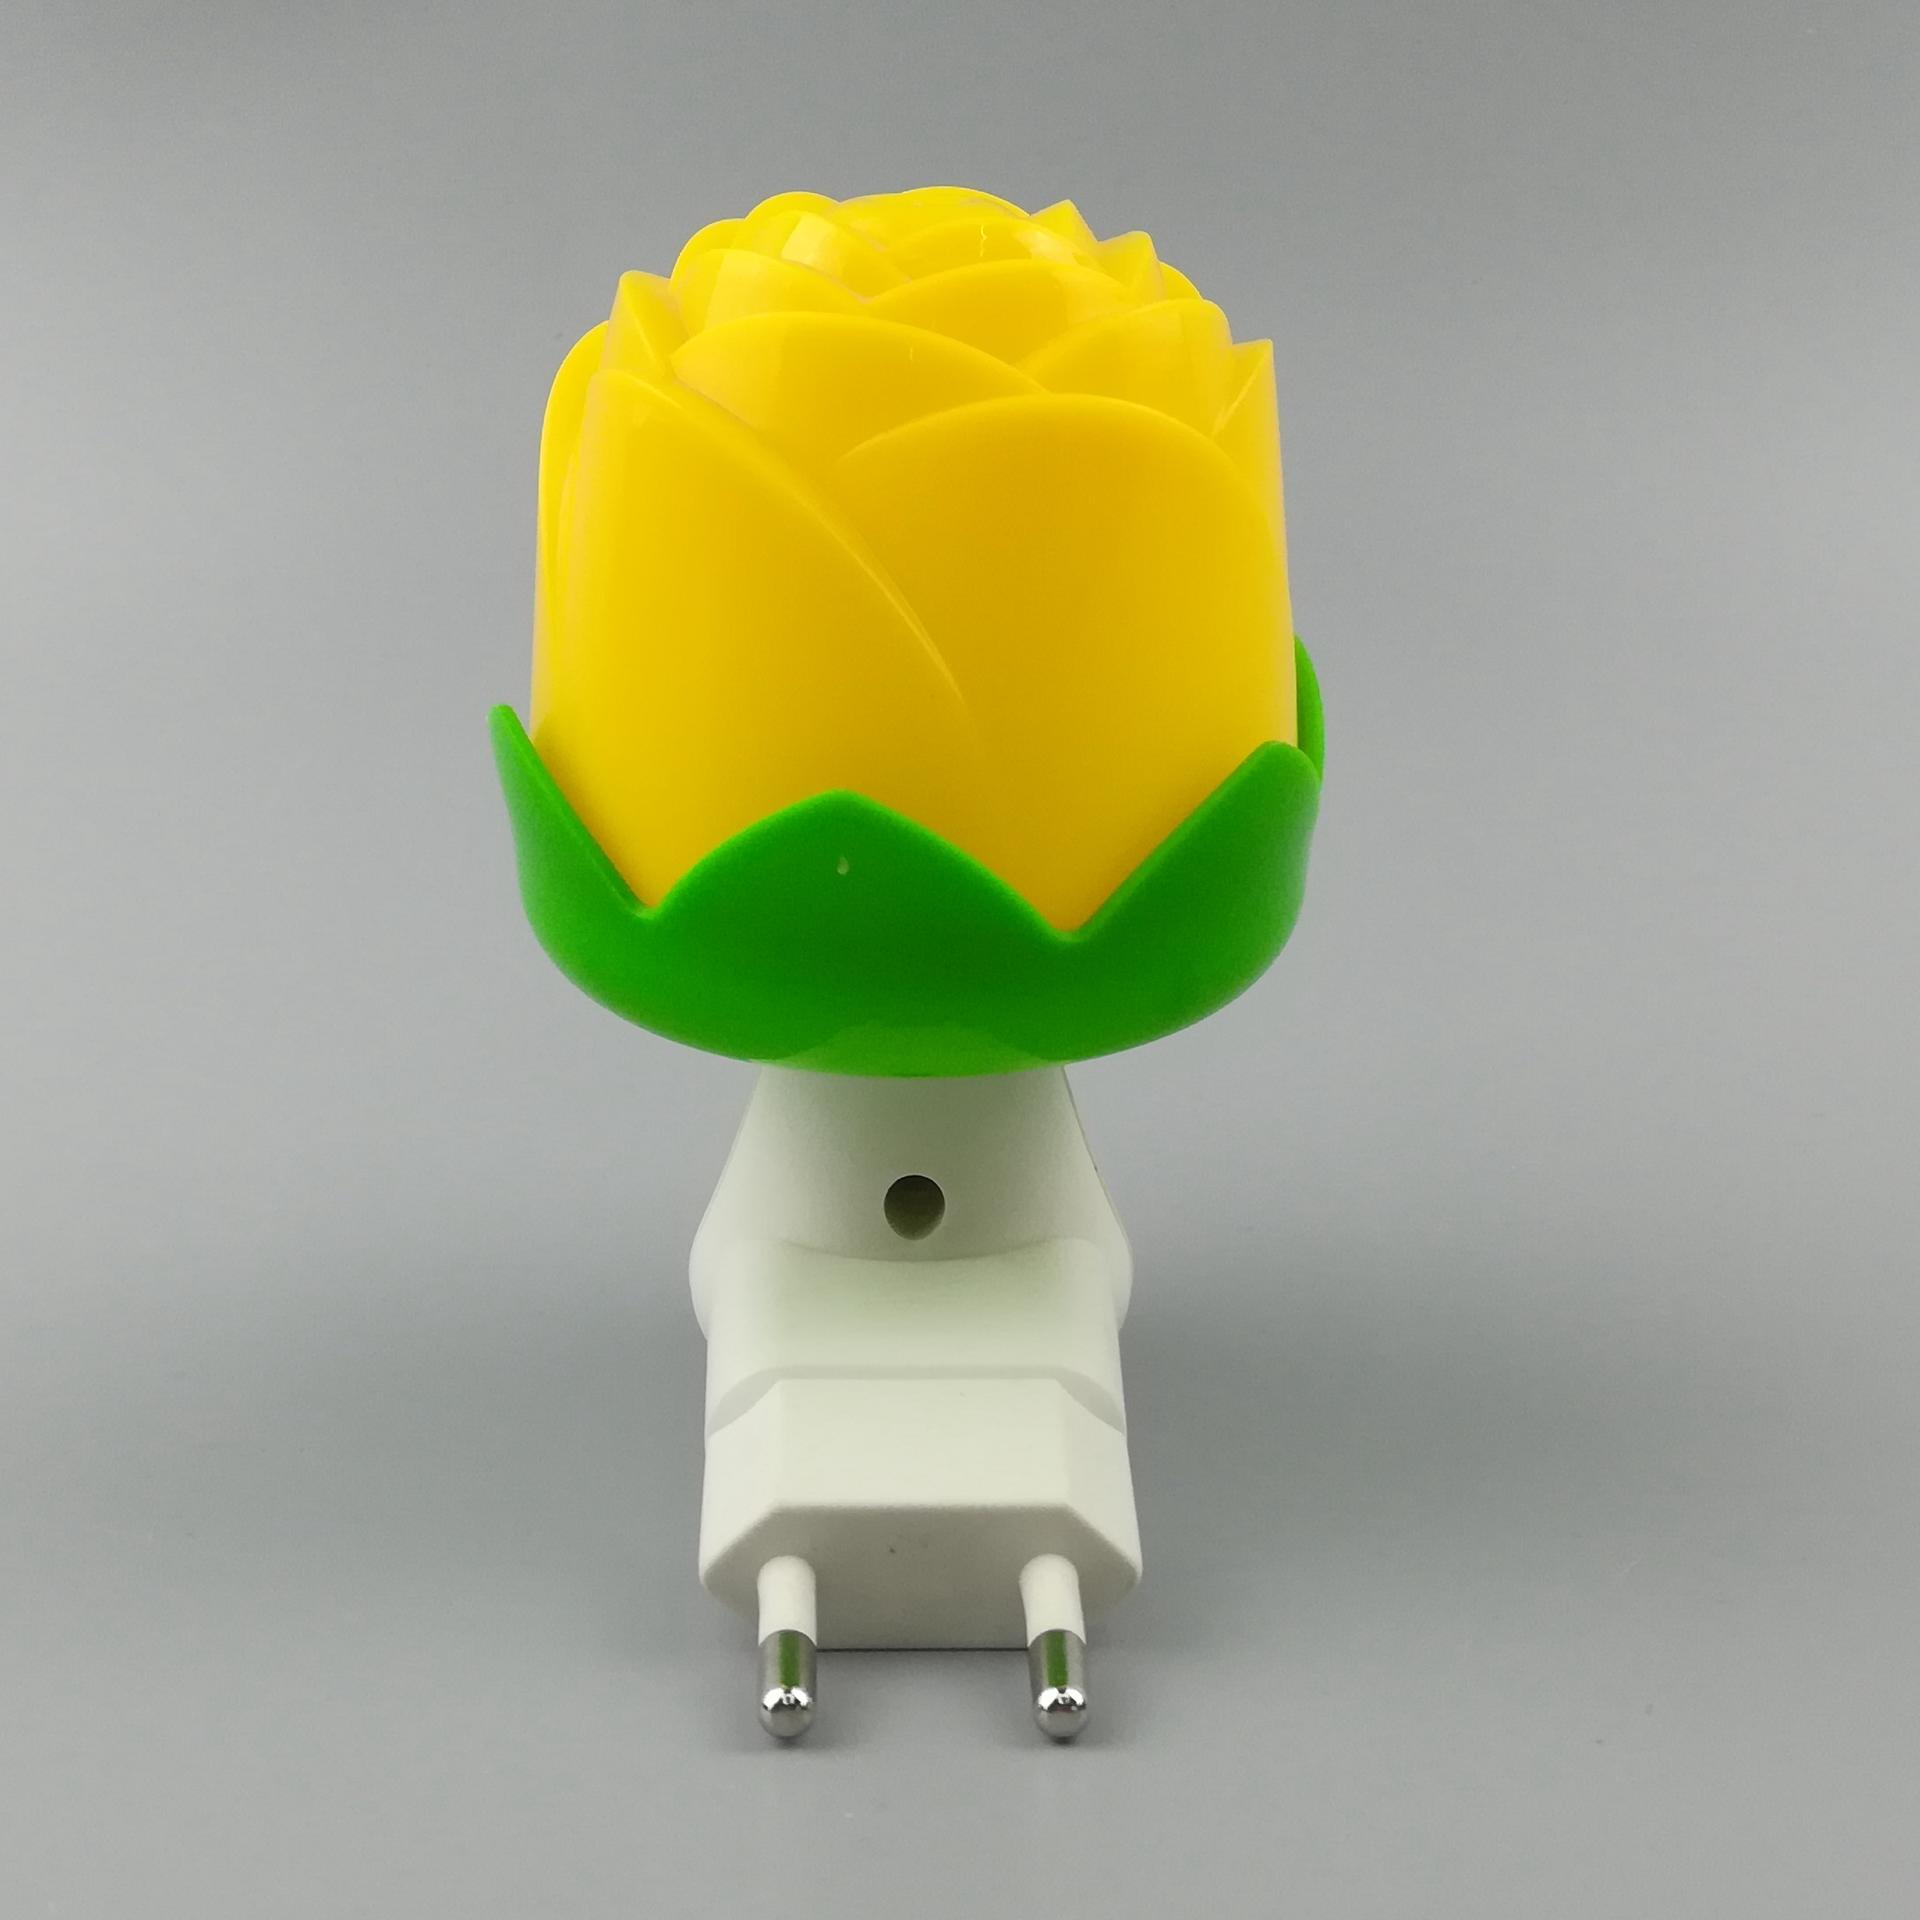 Flower rose shape 3 SMD mini switch sensor plug in night light with 0.6W AC 110V or 220V W042